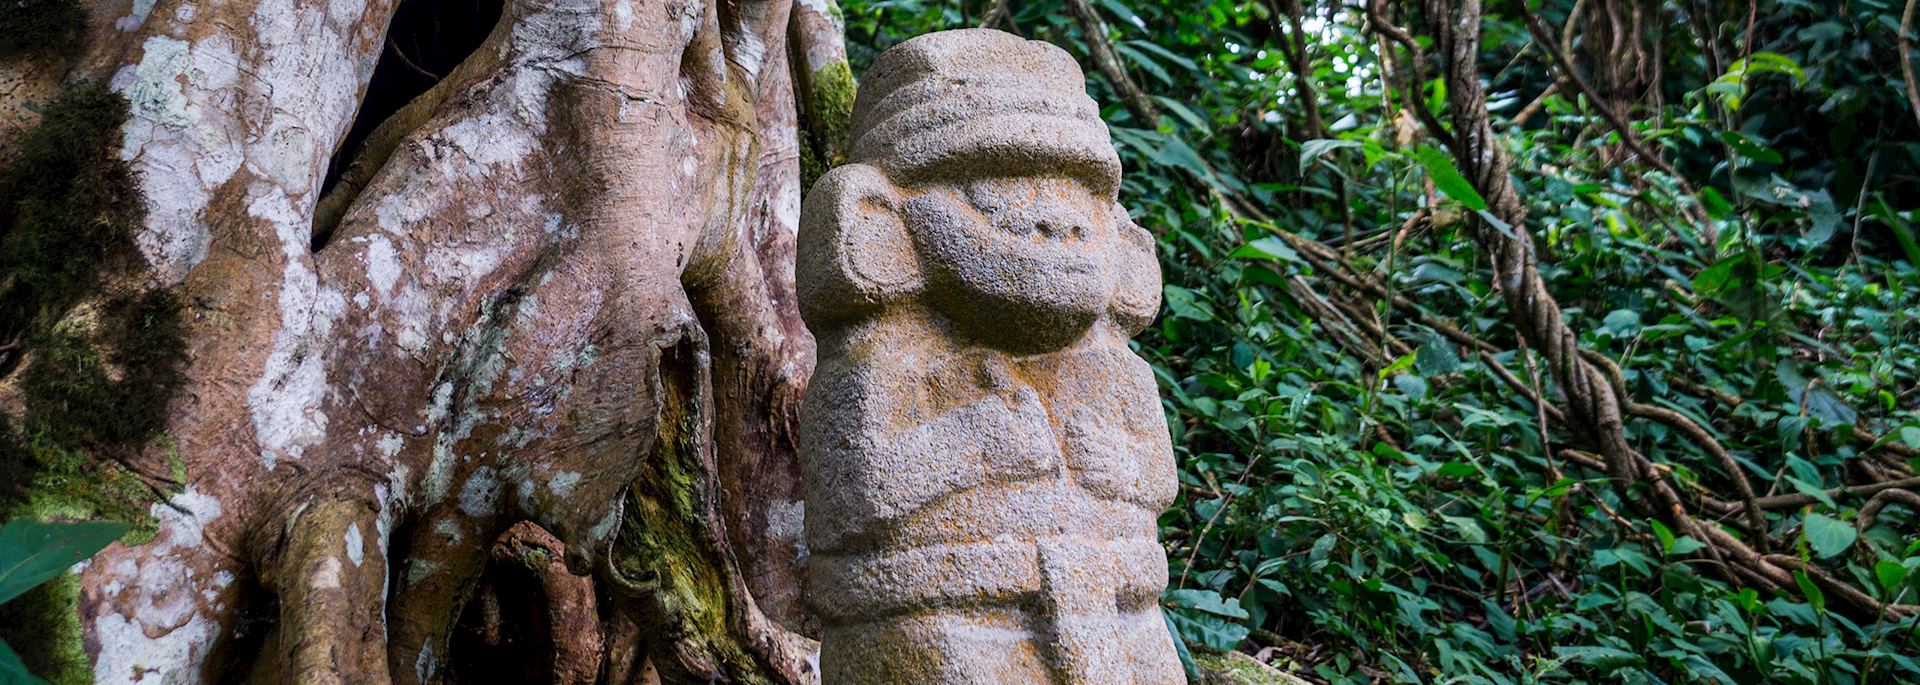 Statue in the rainforest, San Agustin